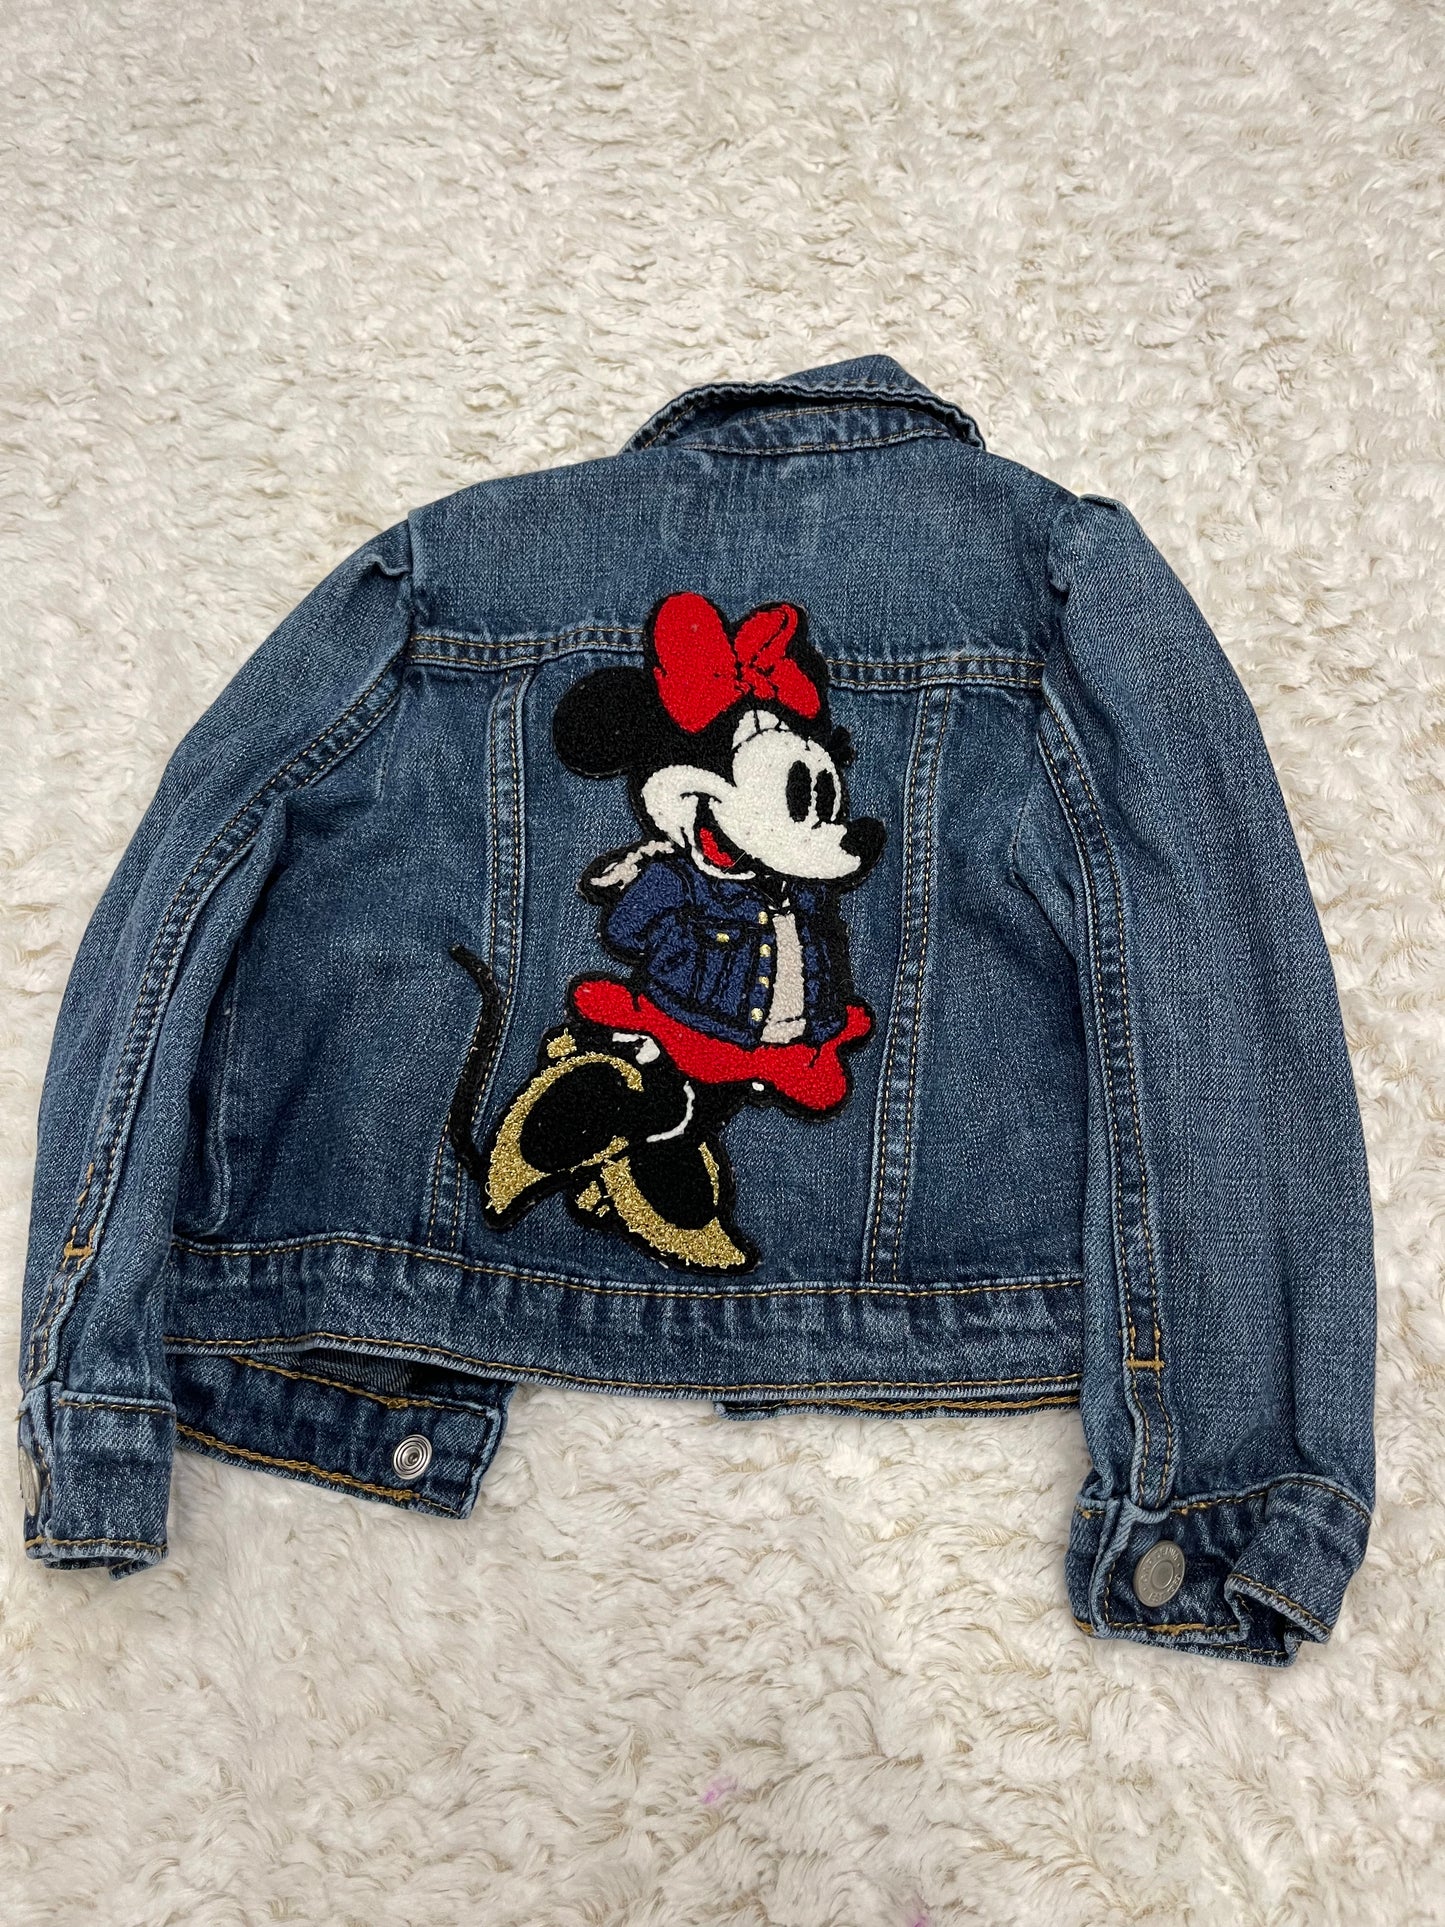 3T Gap Minnie Mouse Jean jacket 💗